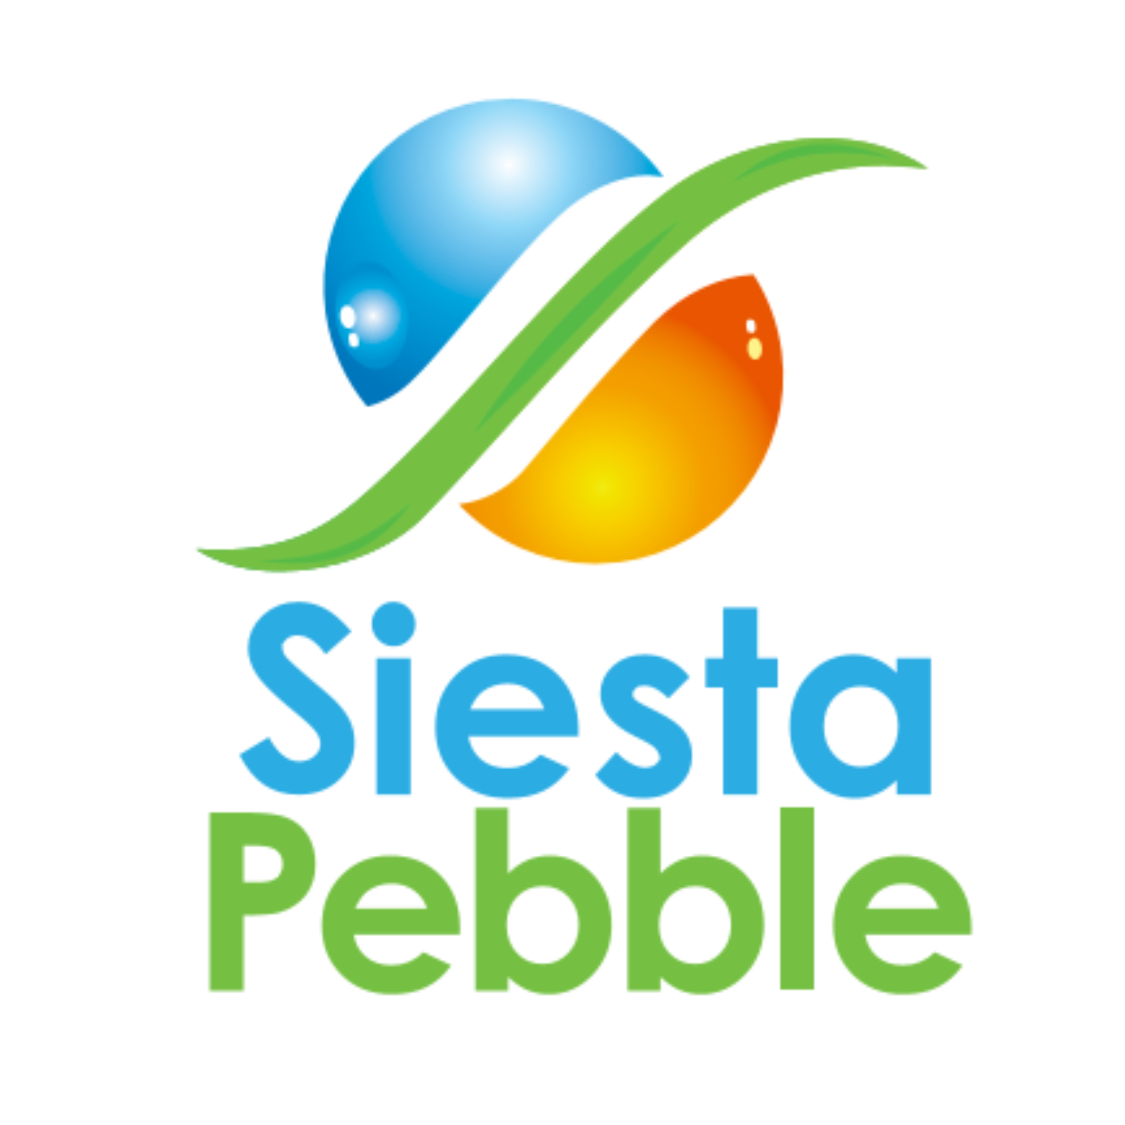 Siesta Pebble